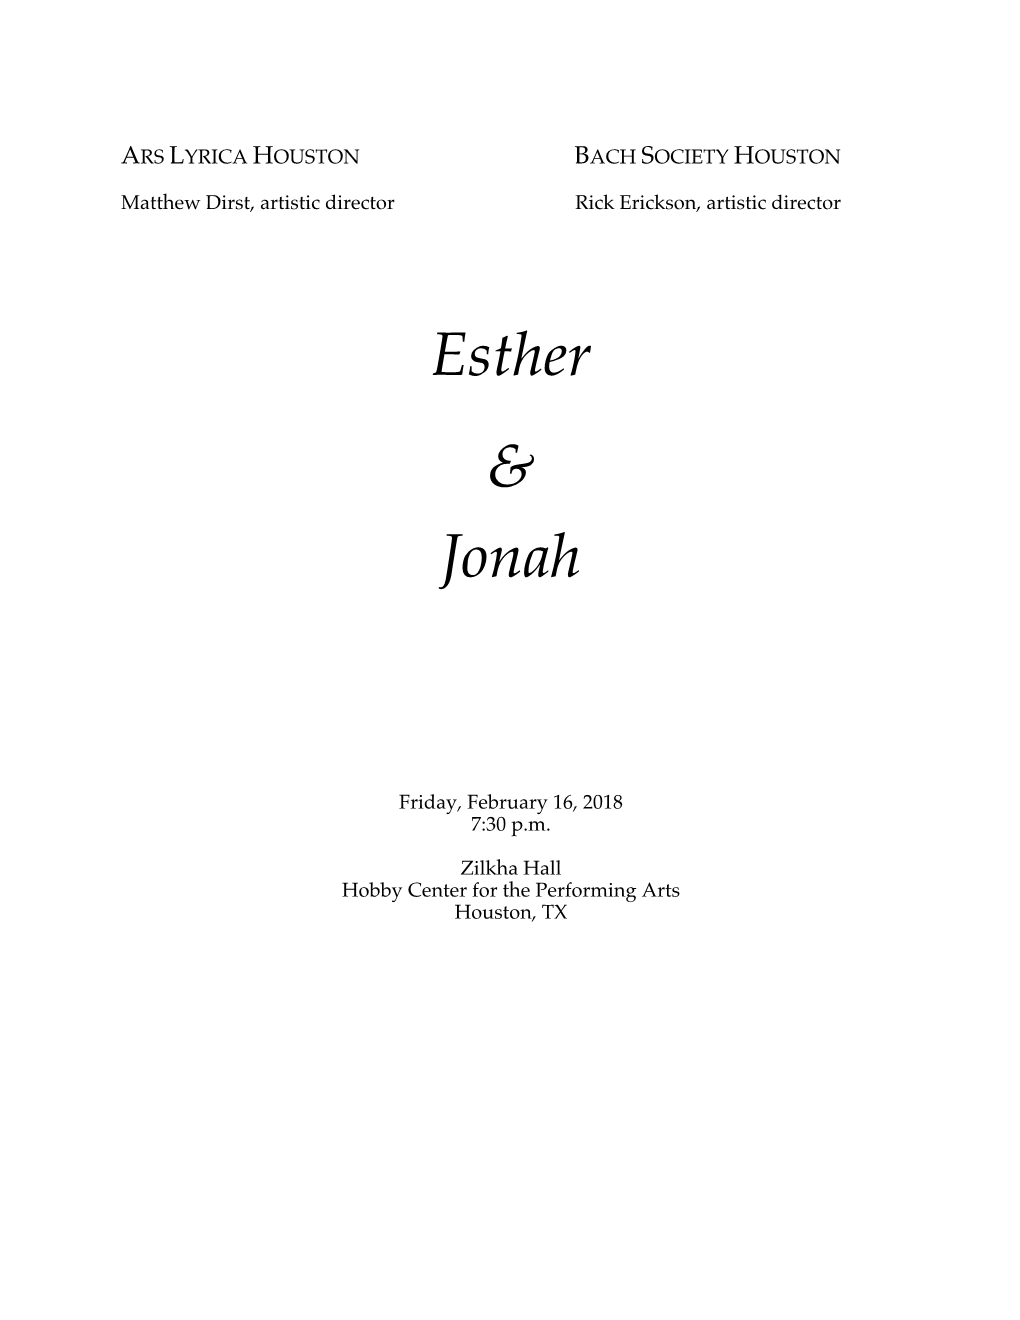 Esther & Jonah